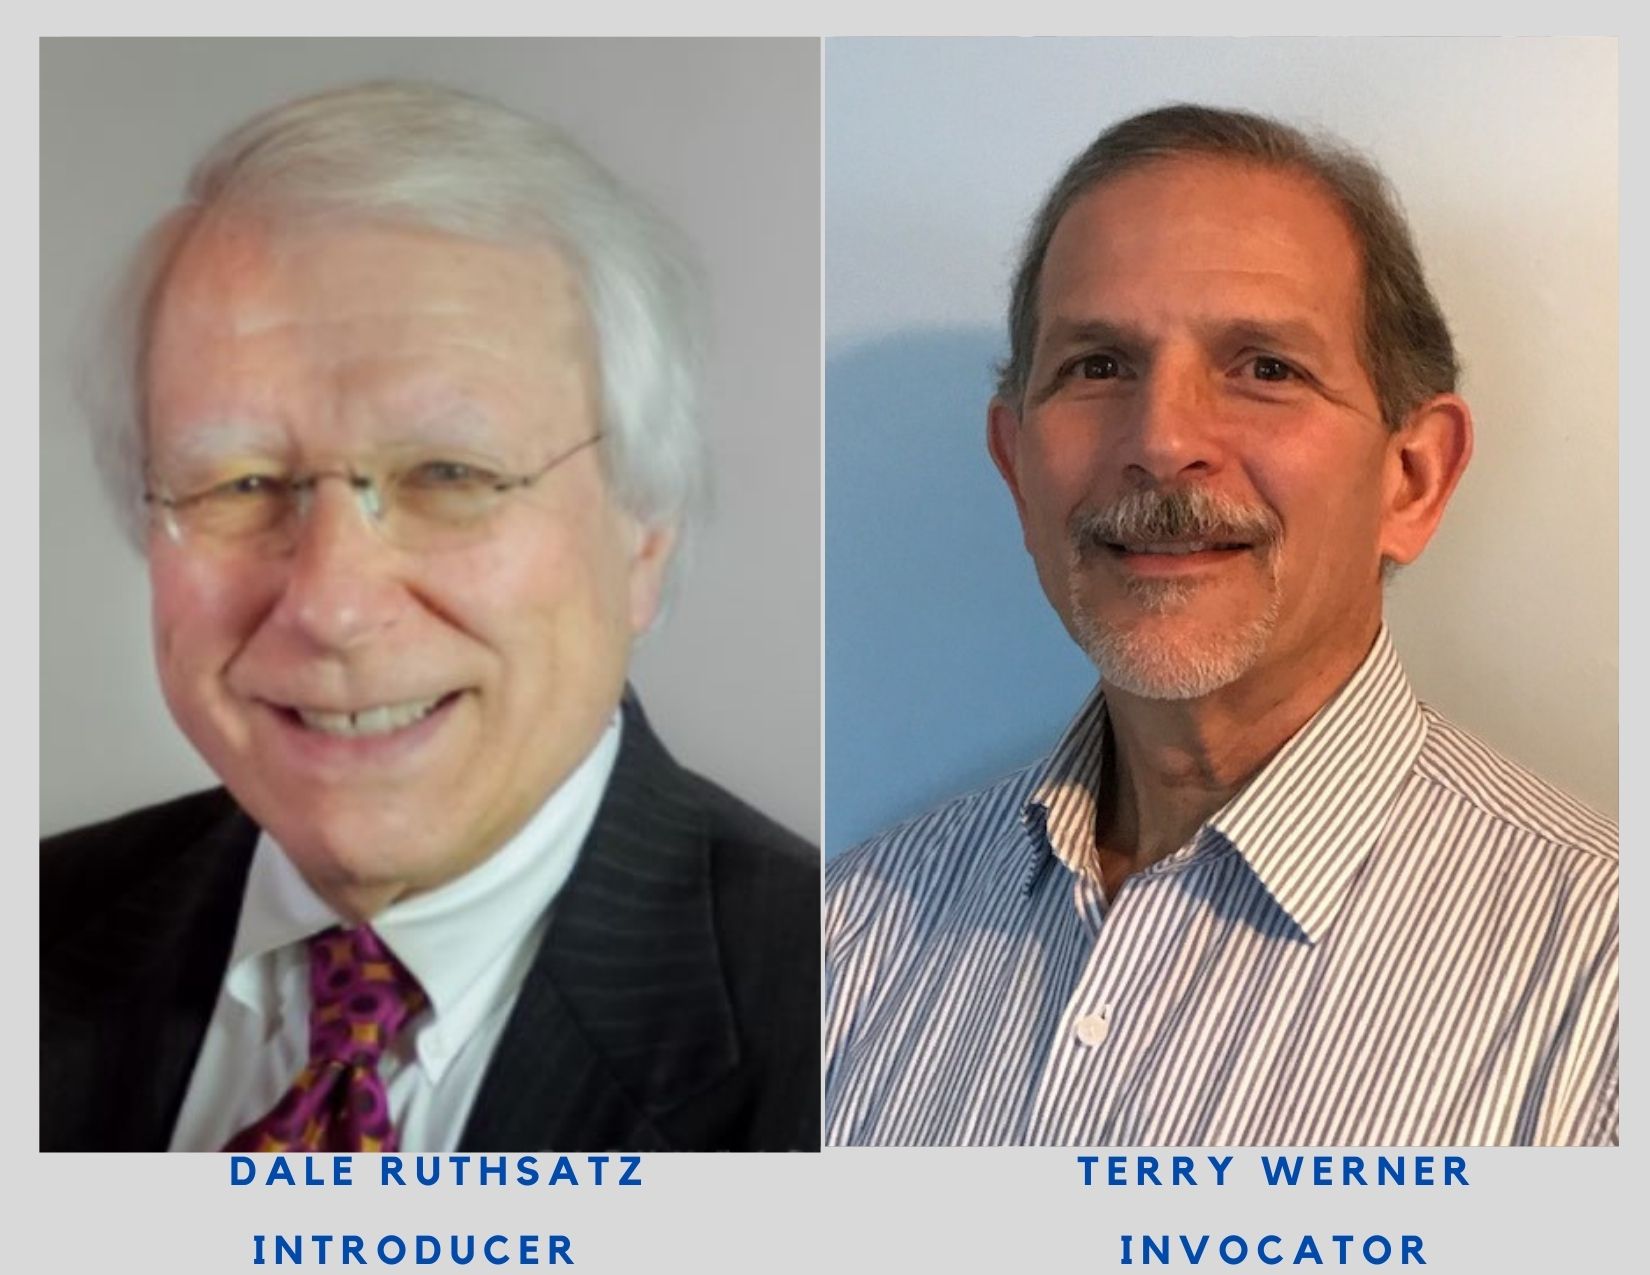 7-15-21 Dale Ruthsatz, Introducer & Terry Werner, Invocator